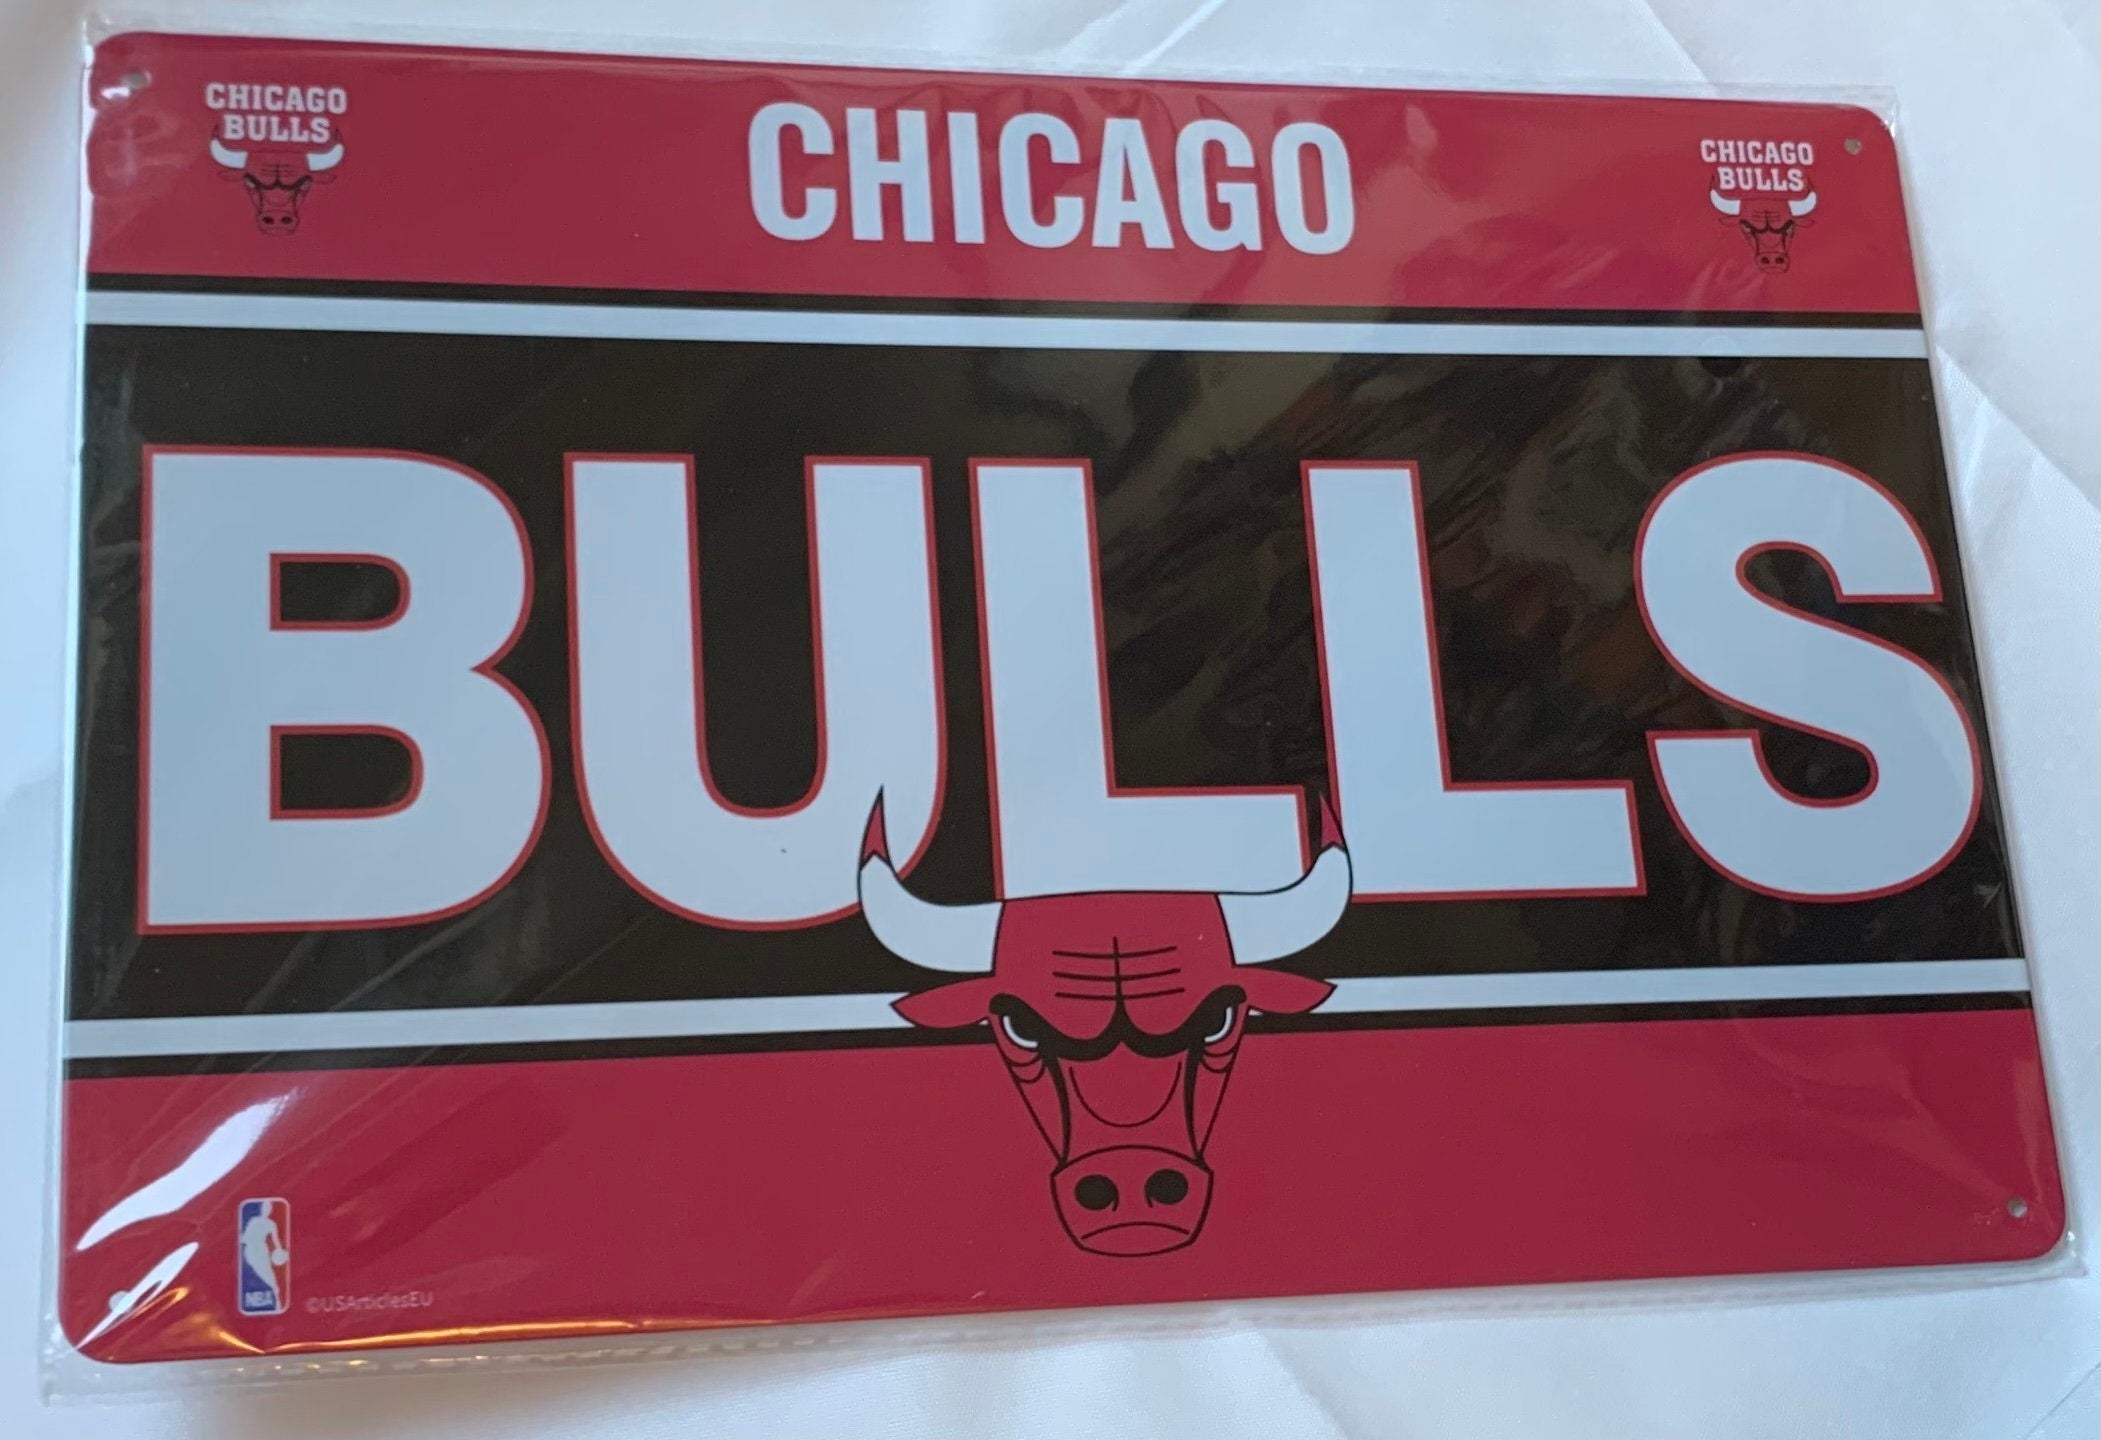 Chicago Bullls NBA basketball USA metal plate license plate Vintage gift sports displays ball michael jordan 23 - Zwart